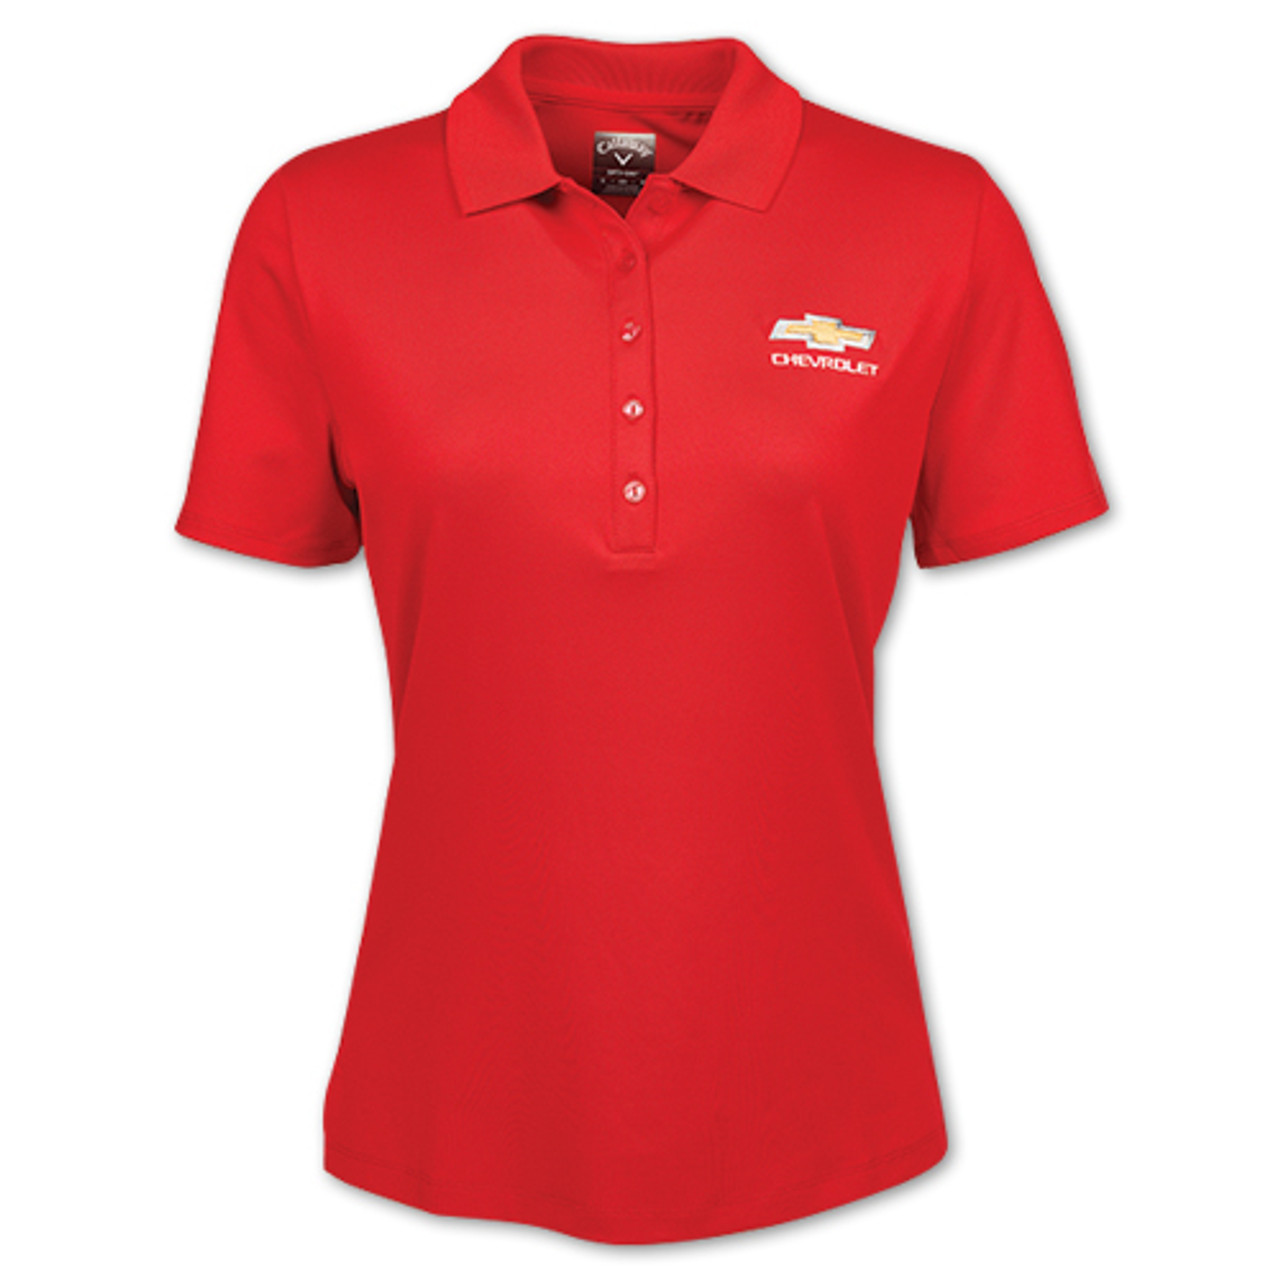 Women's Chevrolet Gold Bowtie Callaway Polo Shirt (Red)